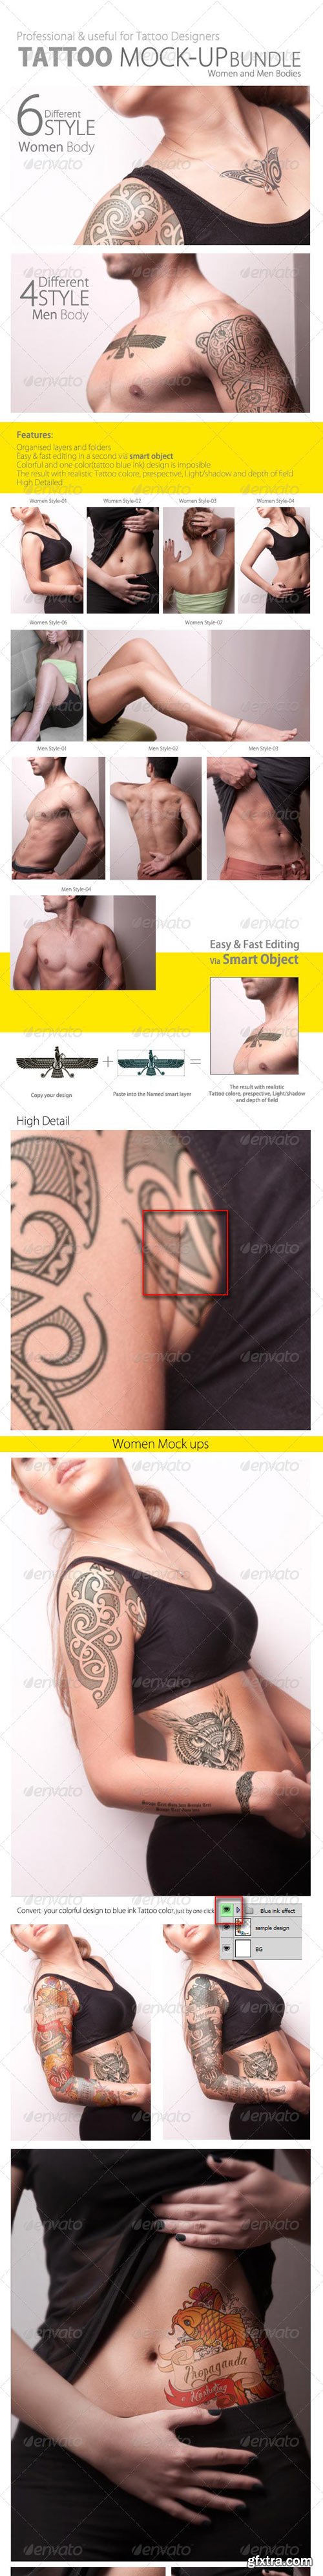 GraphicRiver - Tattoo Mock-up Bundle (Men & Women) - 7894297